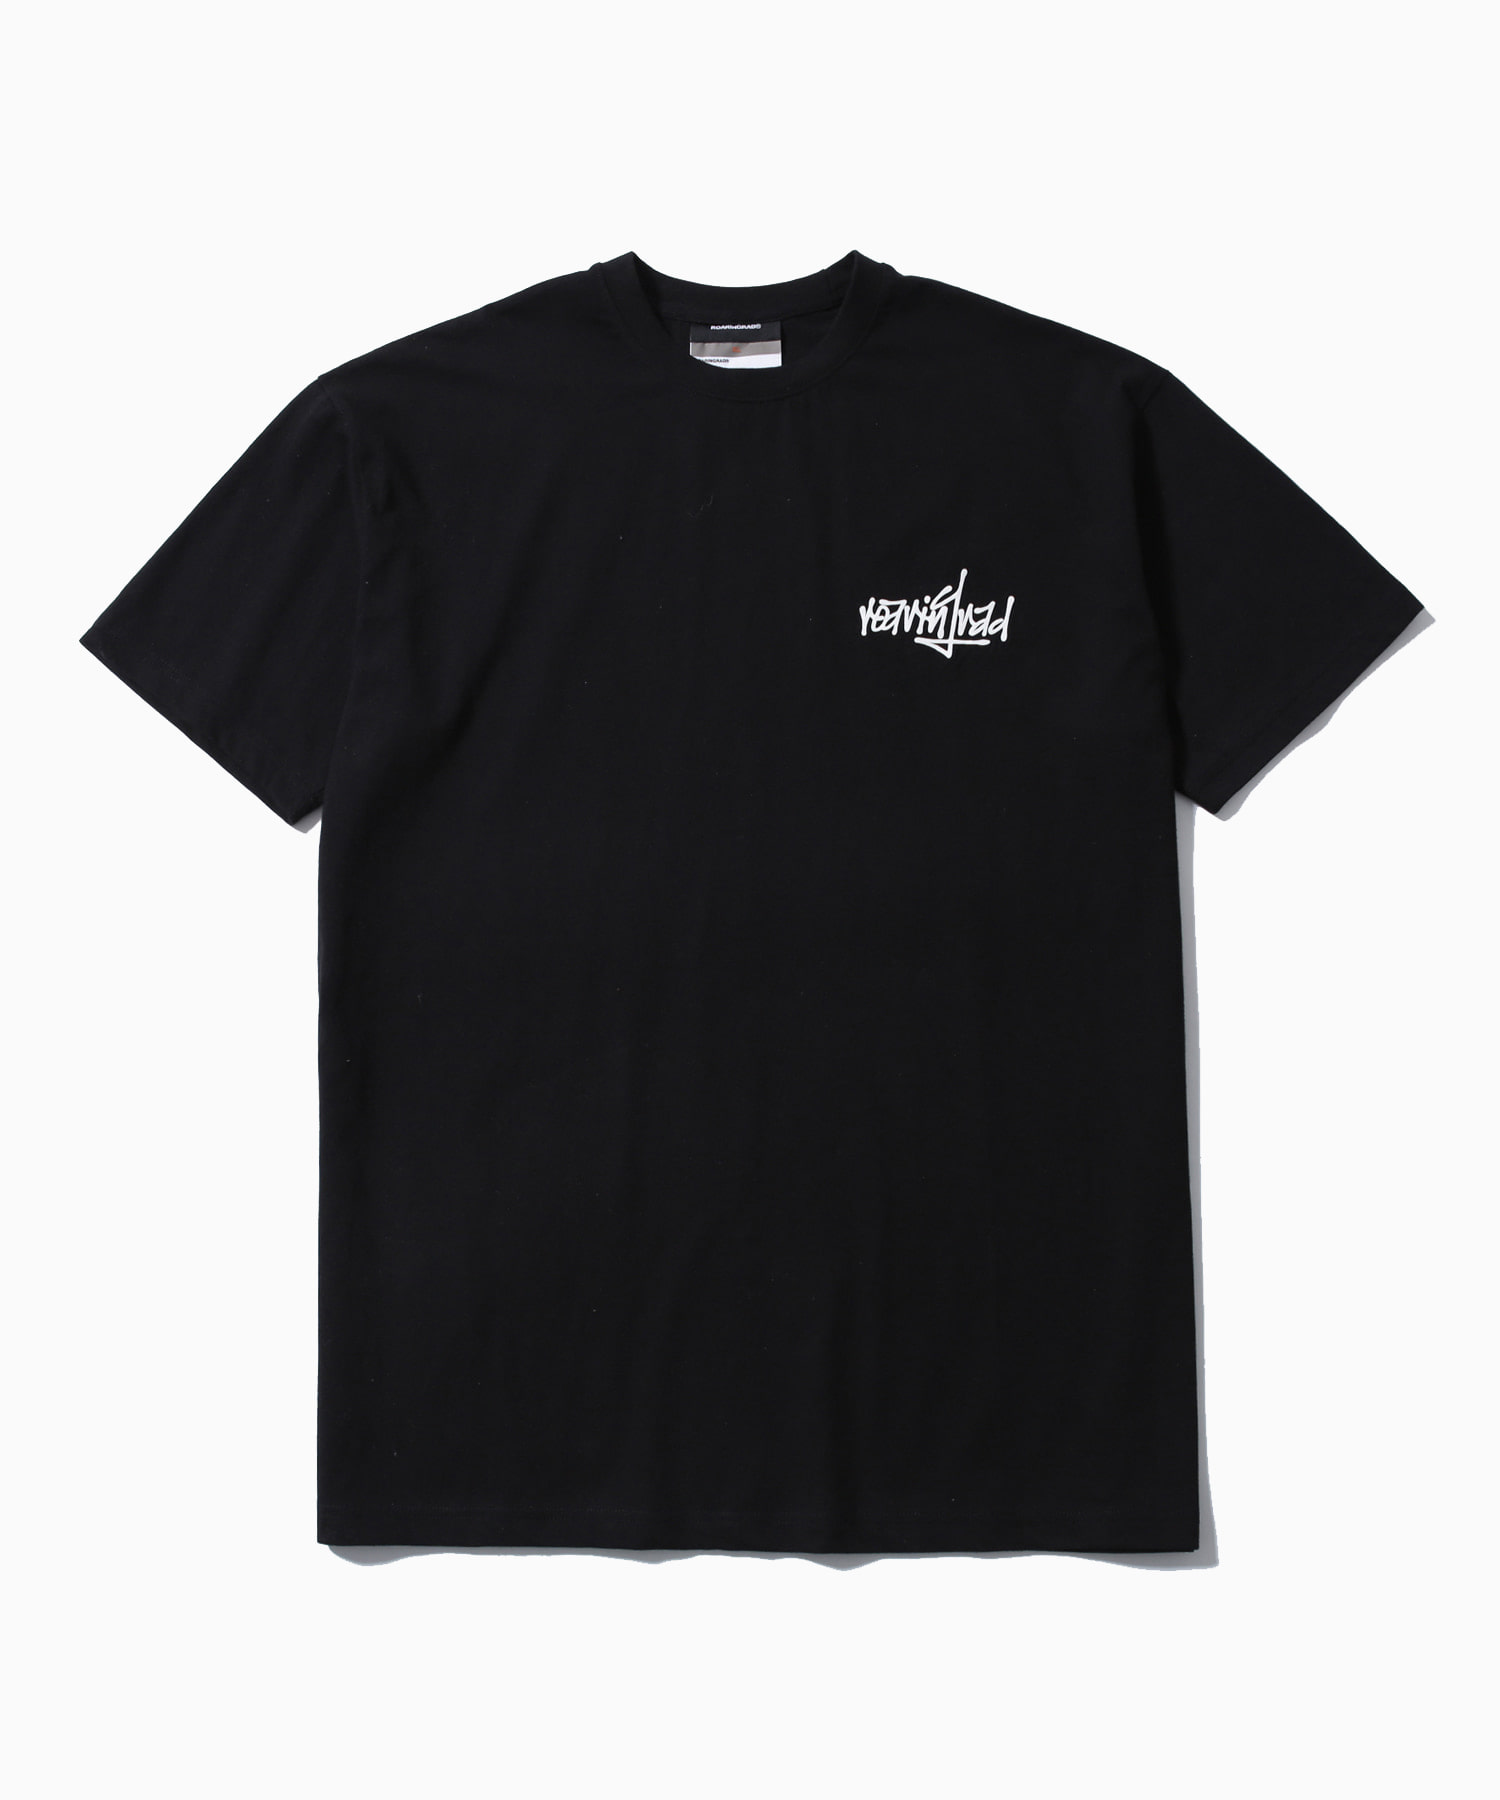 cursive logo t-shirt black - 로어링라드(ROARINGRAD)